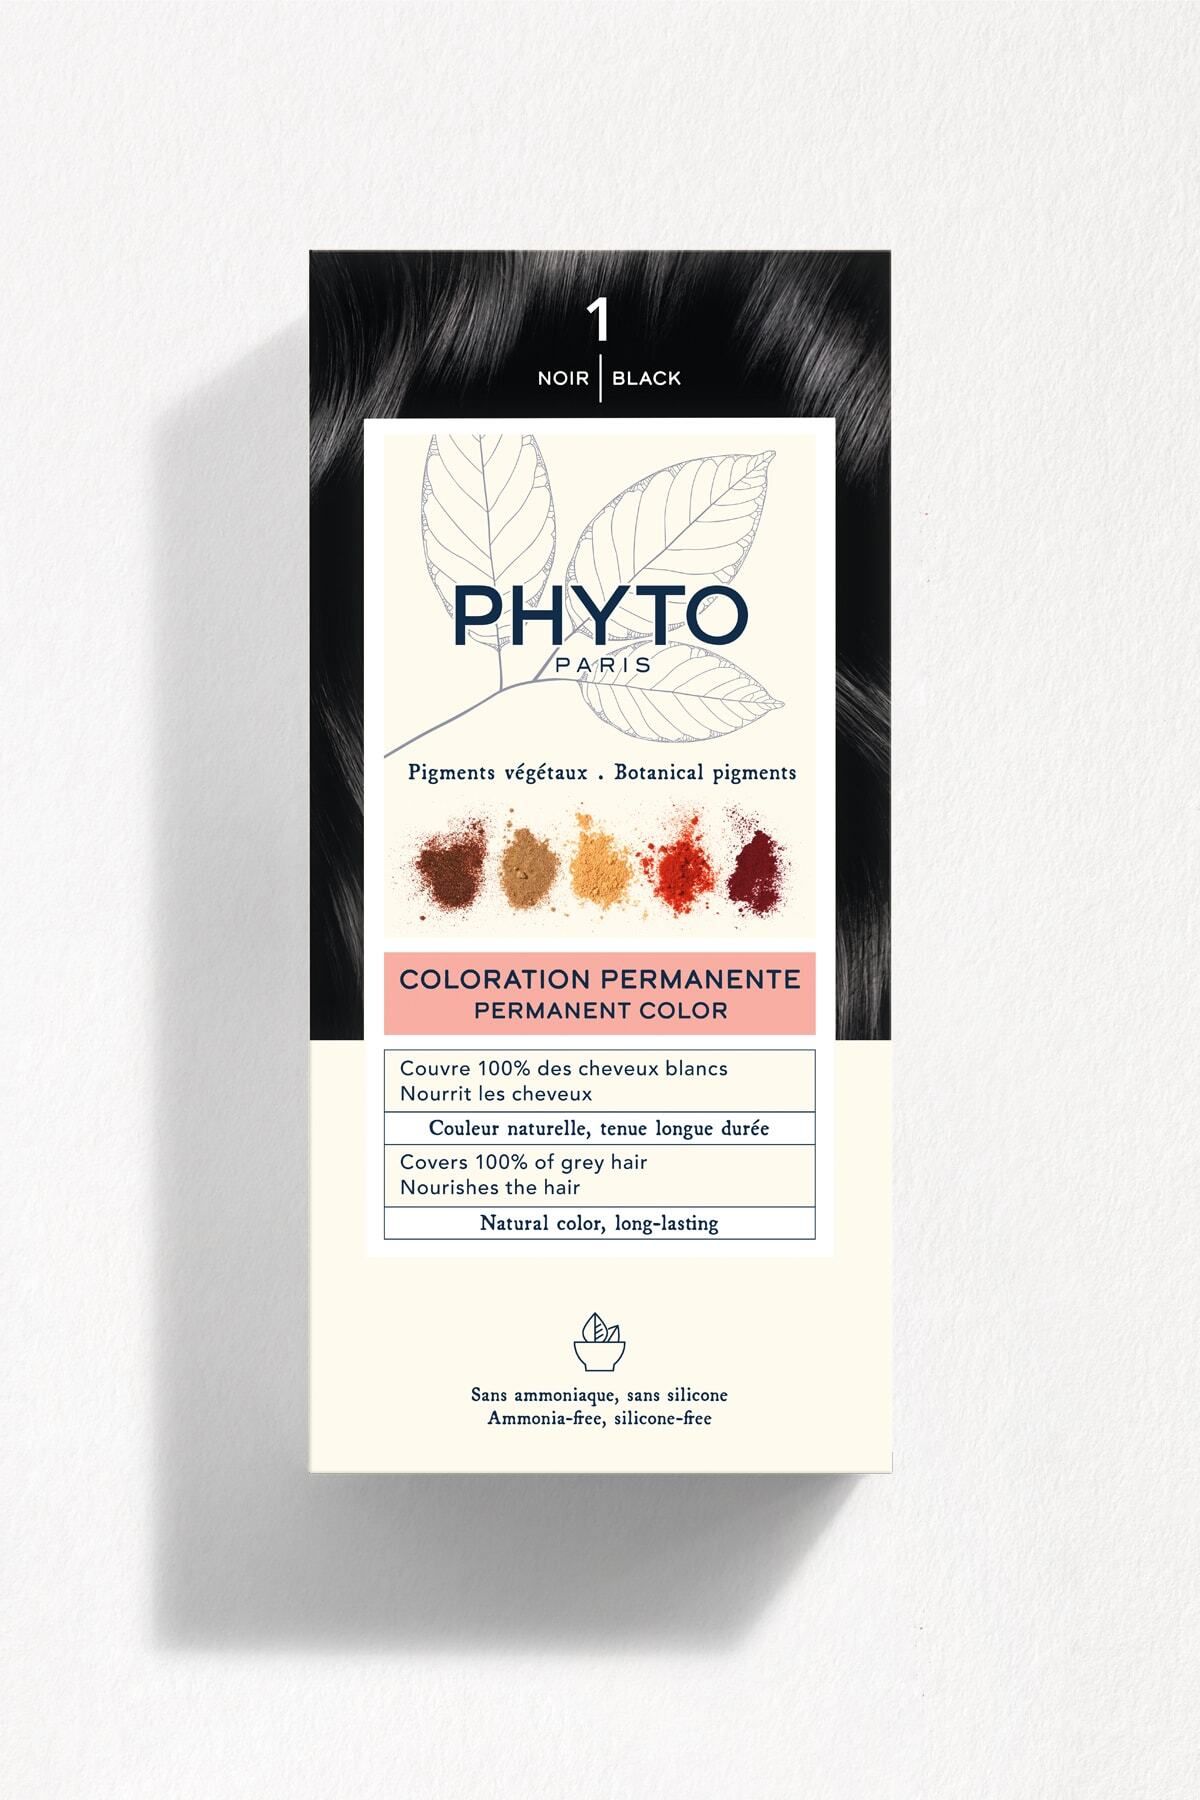 Phyto رنگ موی گیاهی دائمی بدون آمونیاک کالر شماره ۱ رنگ مشکی